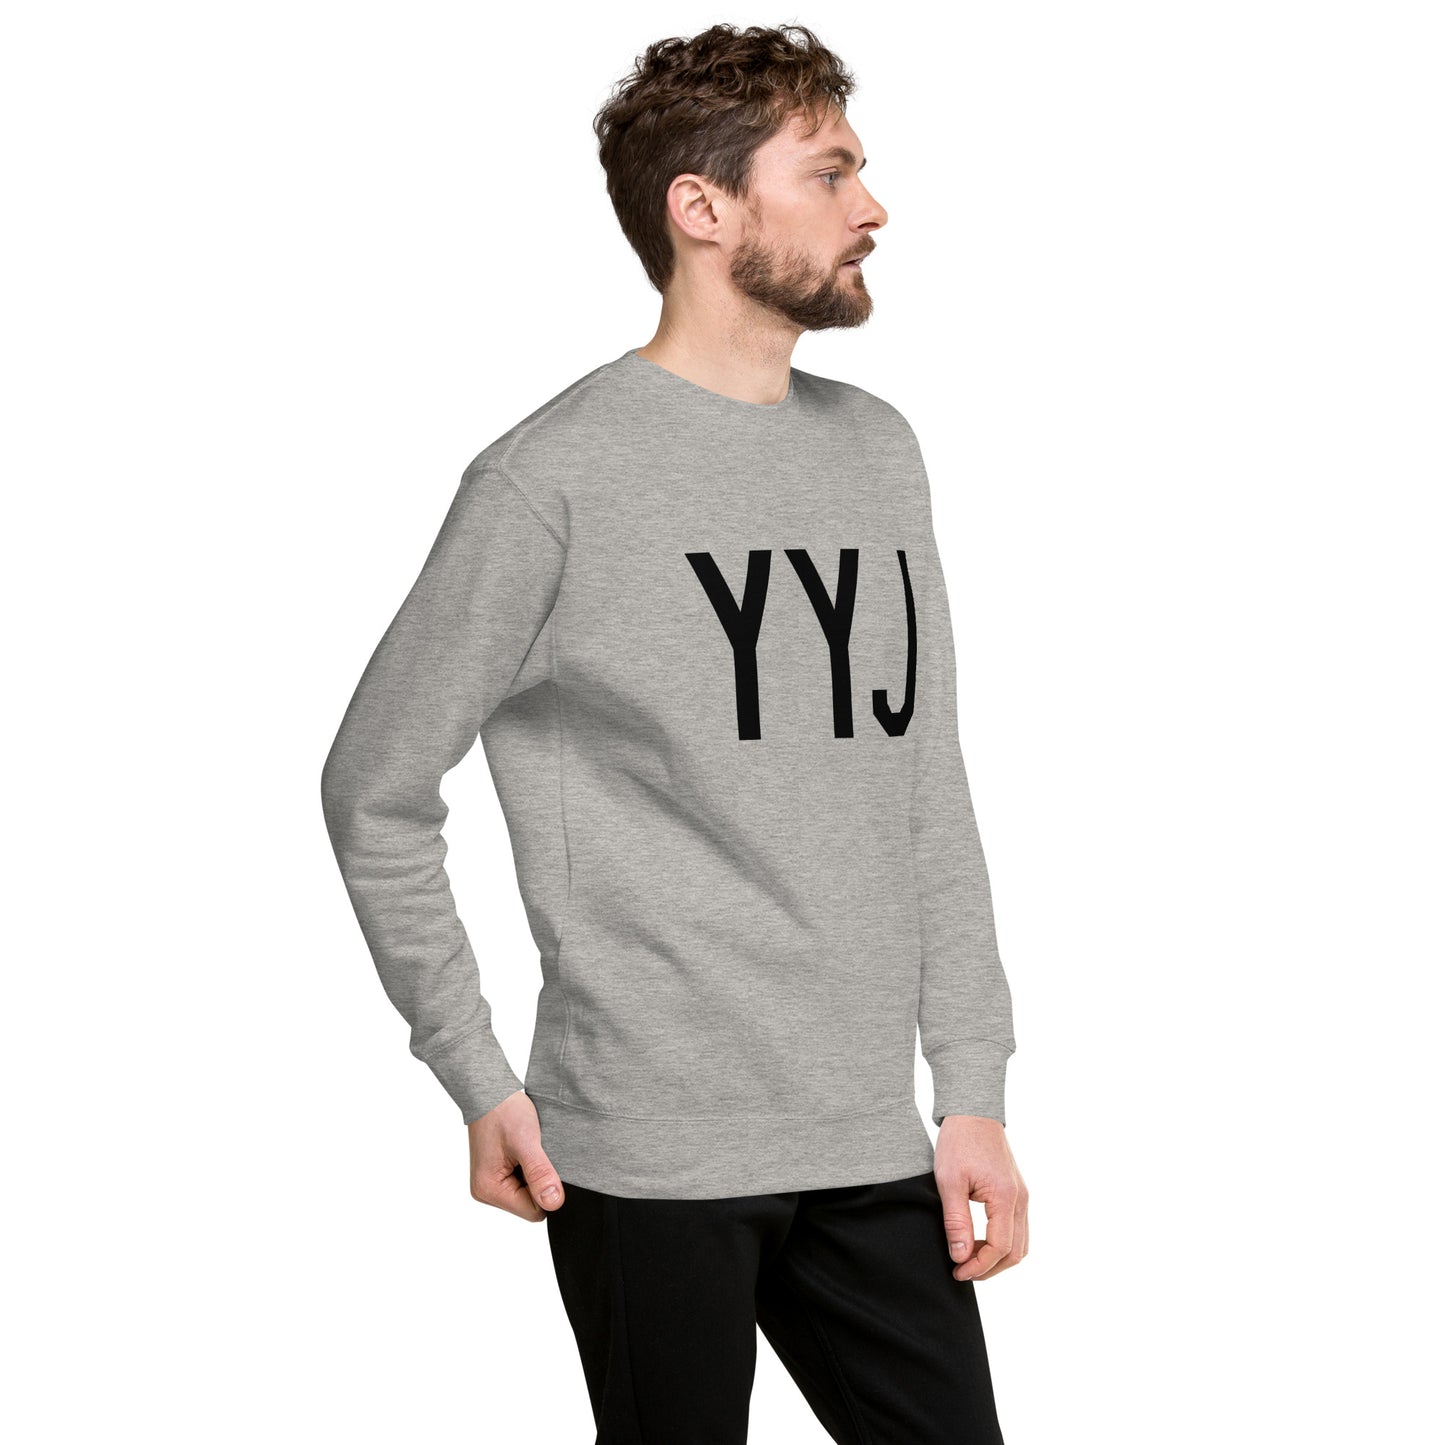 YYJ Victoria British Columbia Premium Sweatshirt